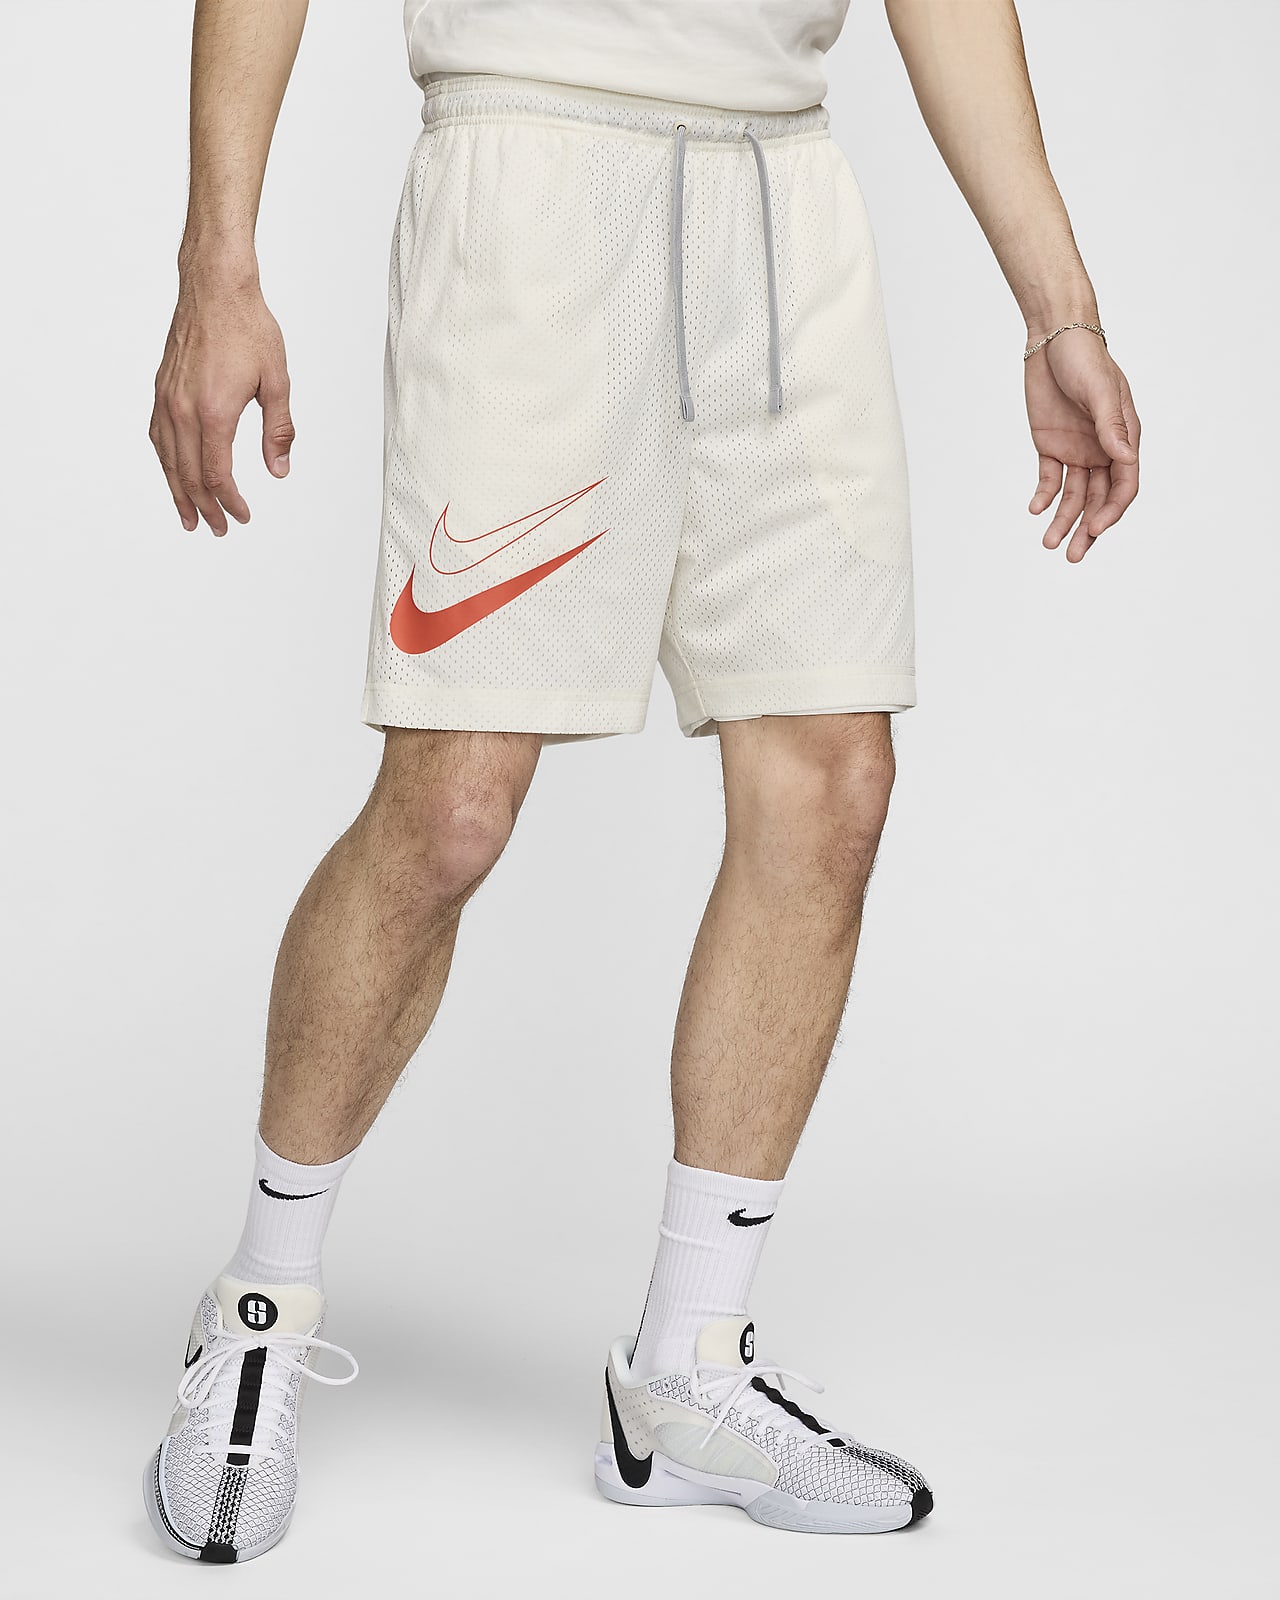 KD Men's Dri-FIT Standard Issue Reversible Basketball Shorts